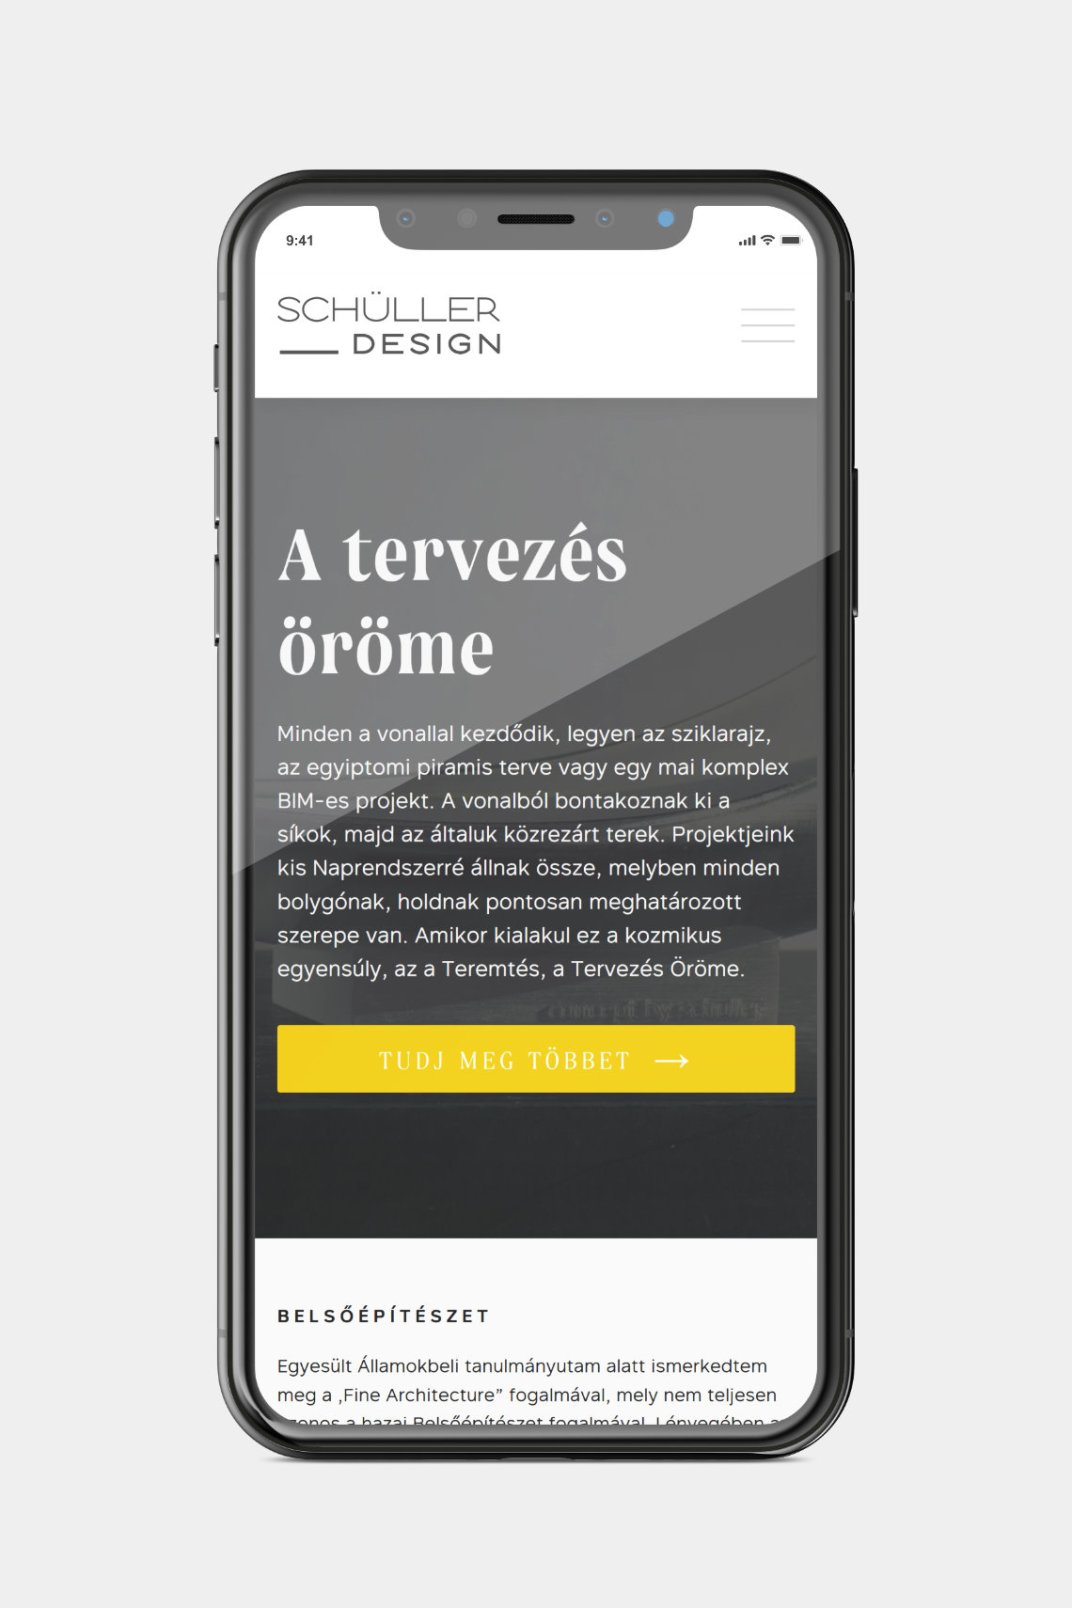 Web design and web development for SCHÜLLER ÉS TÁRSAI design studio home page on phone